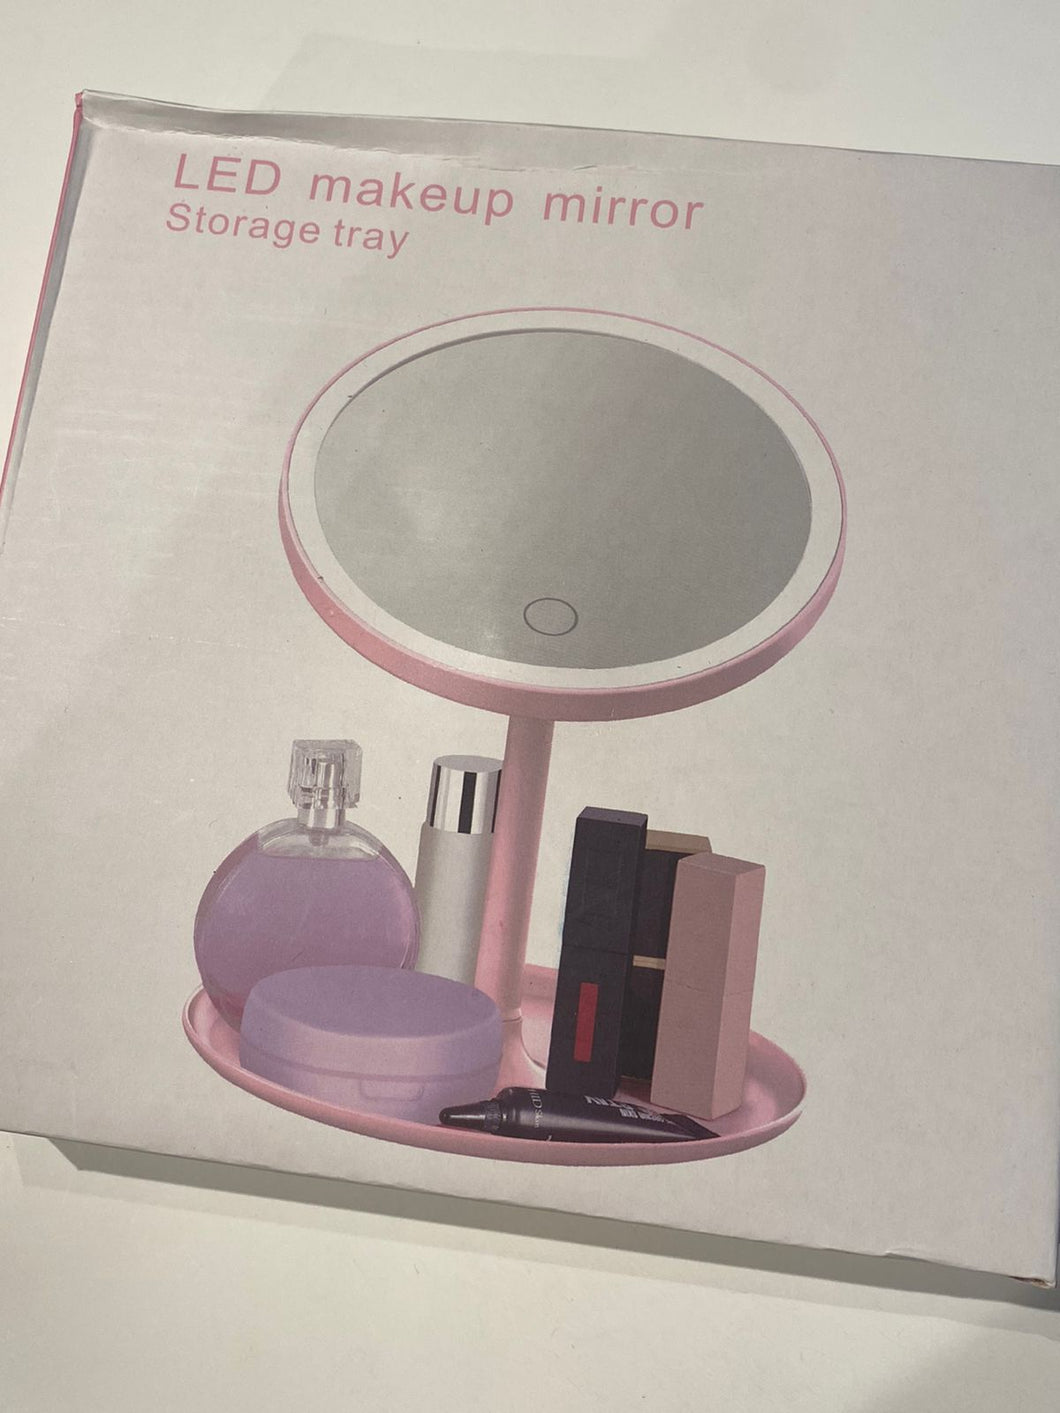 LED Makeup Mirror Storage Tray